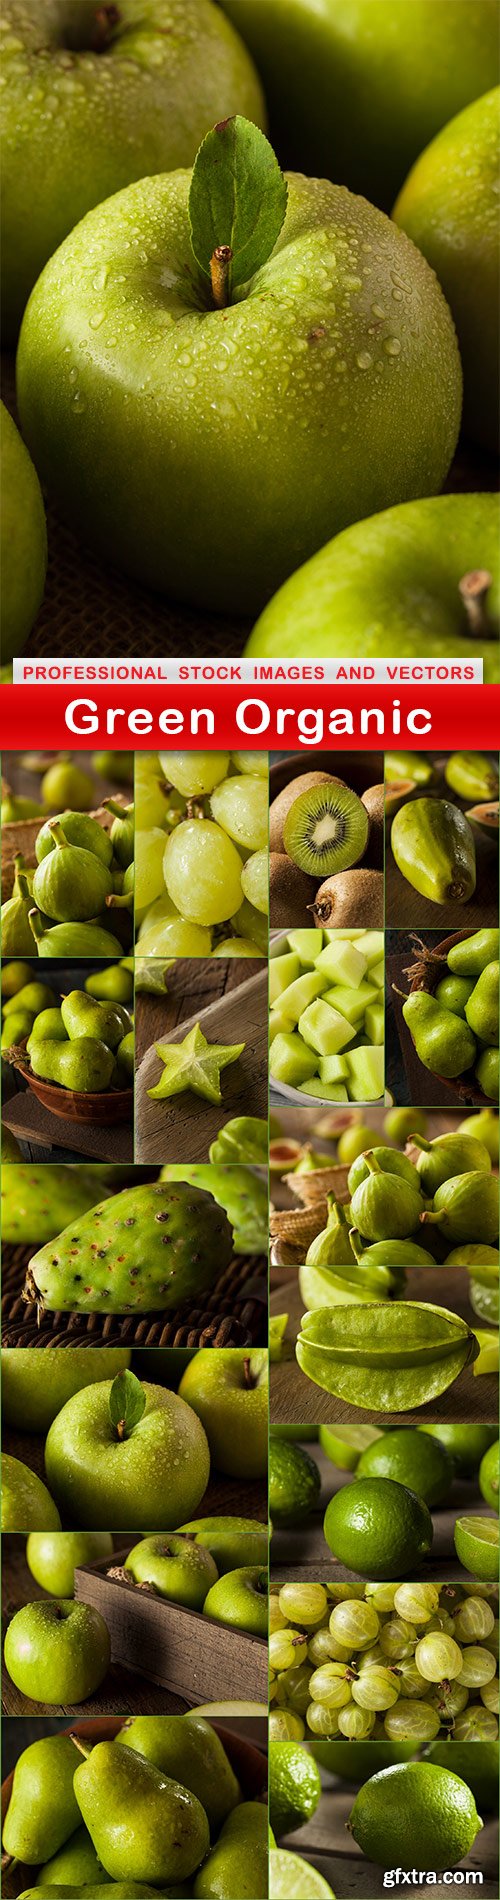 Green Organic - 18 UHQ JPEG